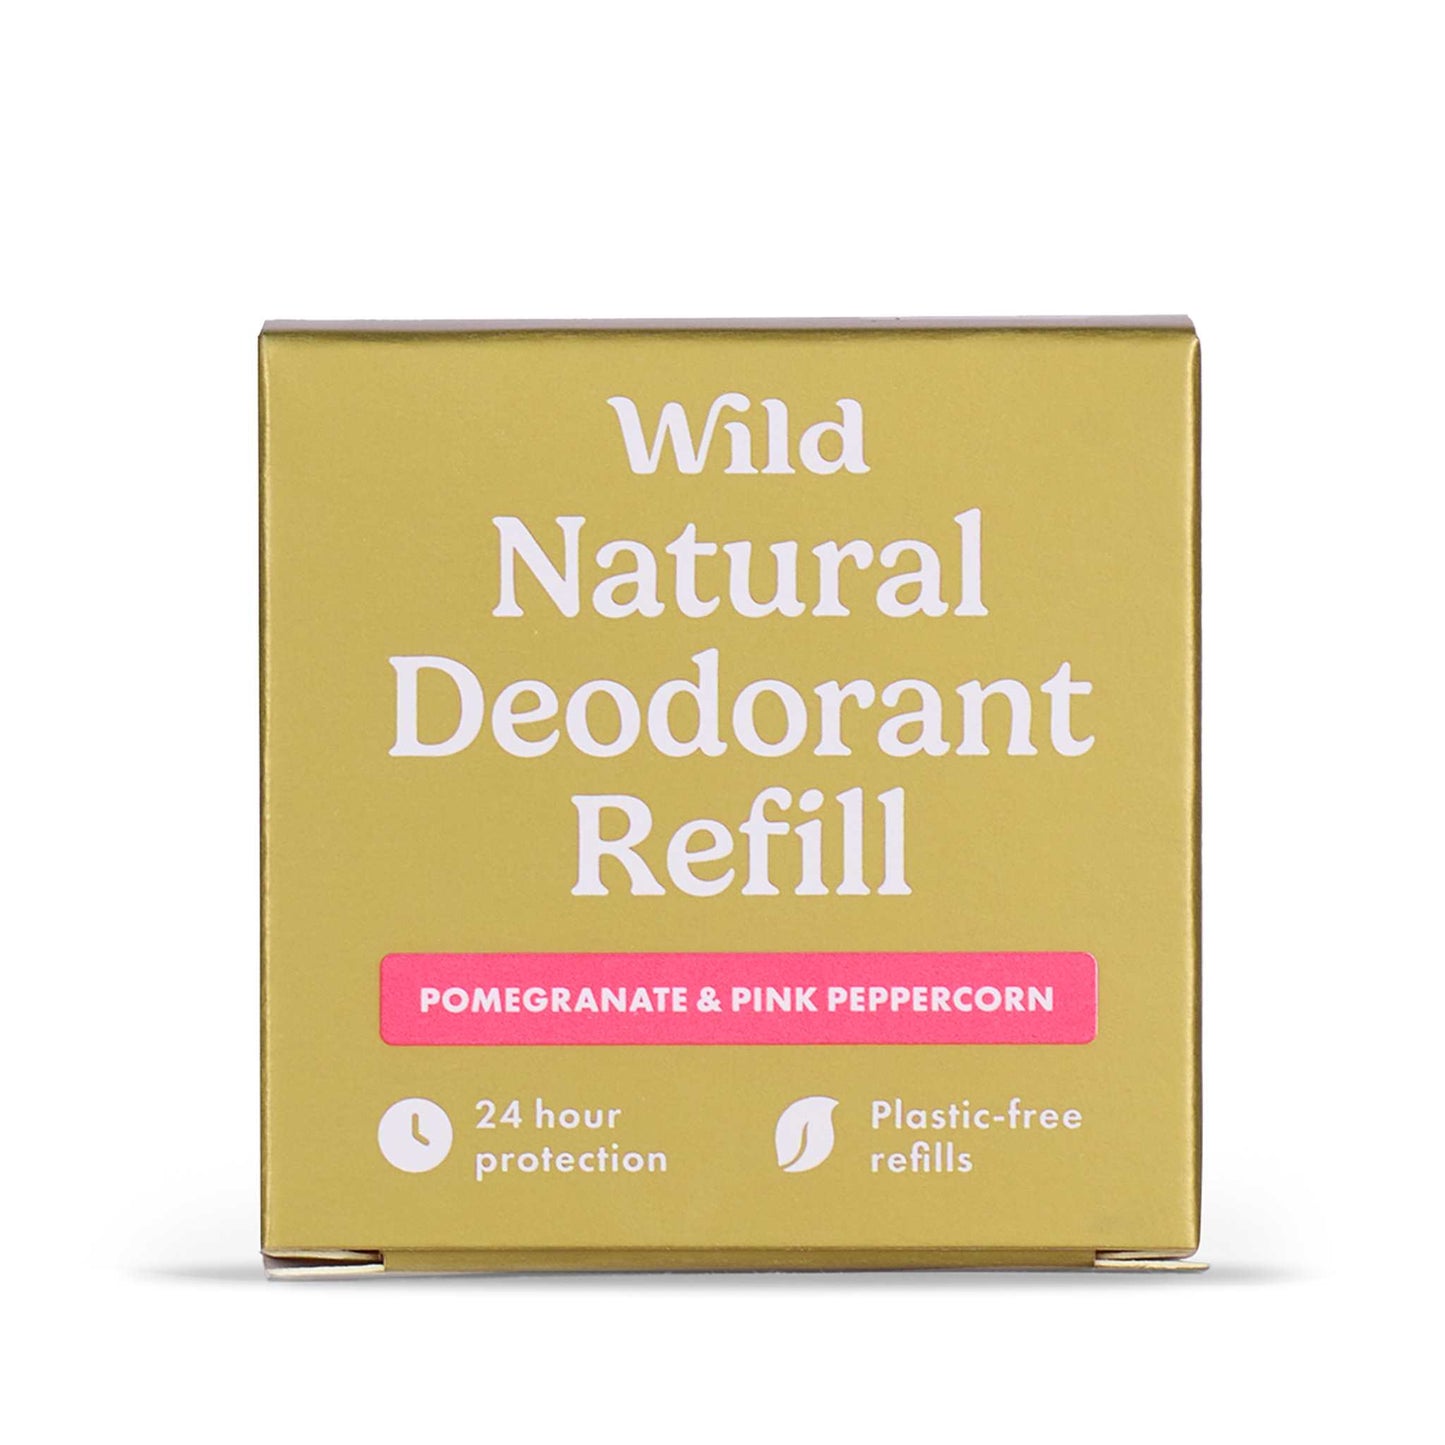 Wild Deodorant Wild Natural Deodorant Refill - Pomegranate & Pink Peppercorn